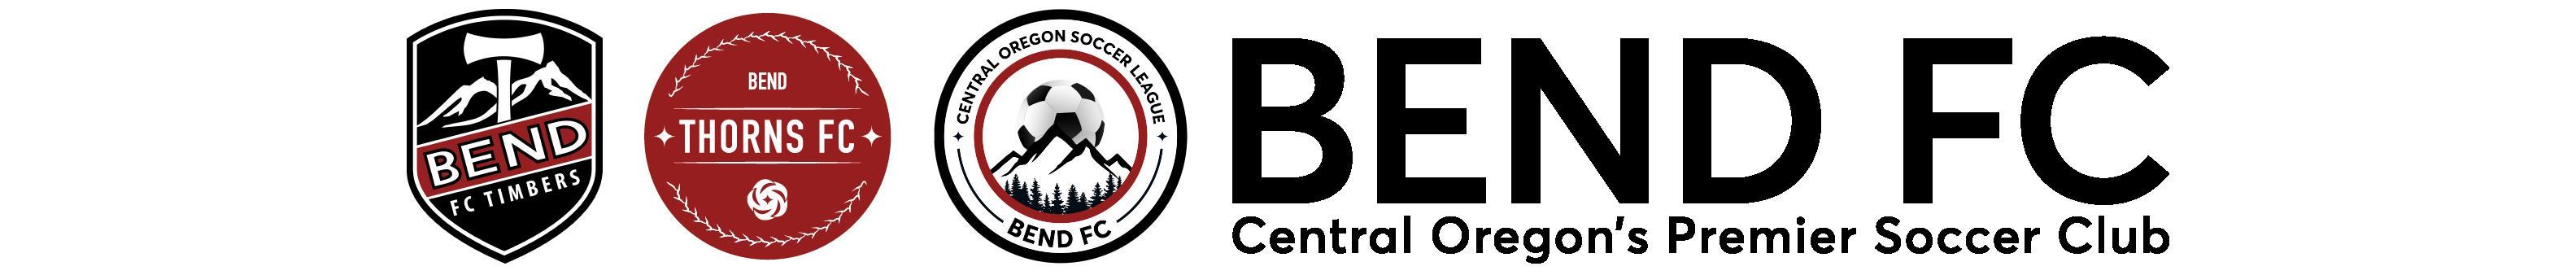 Bend FC banner